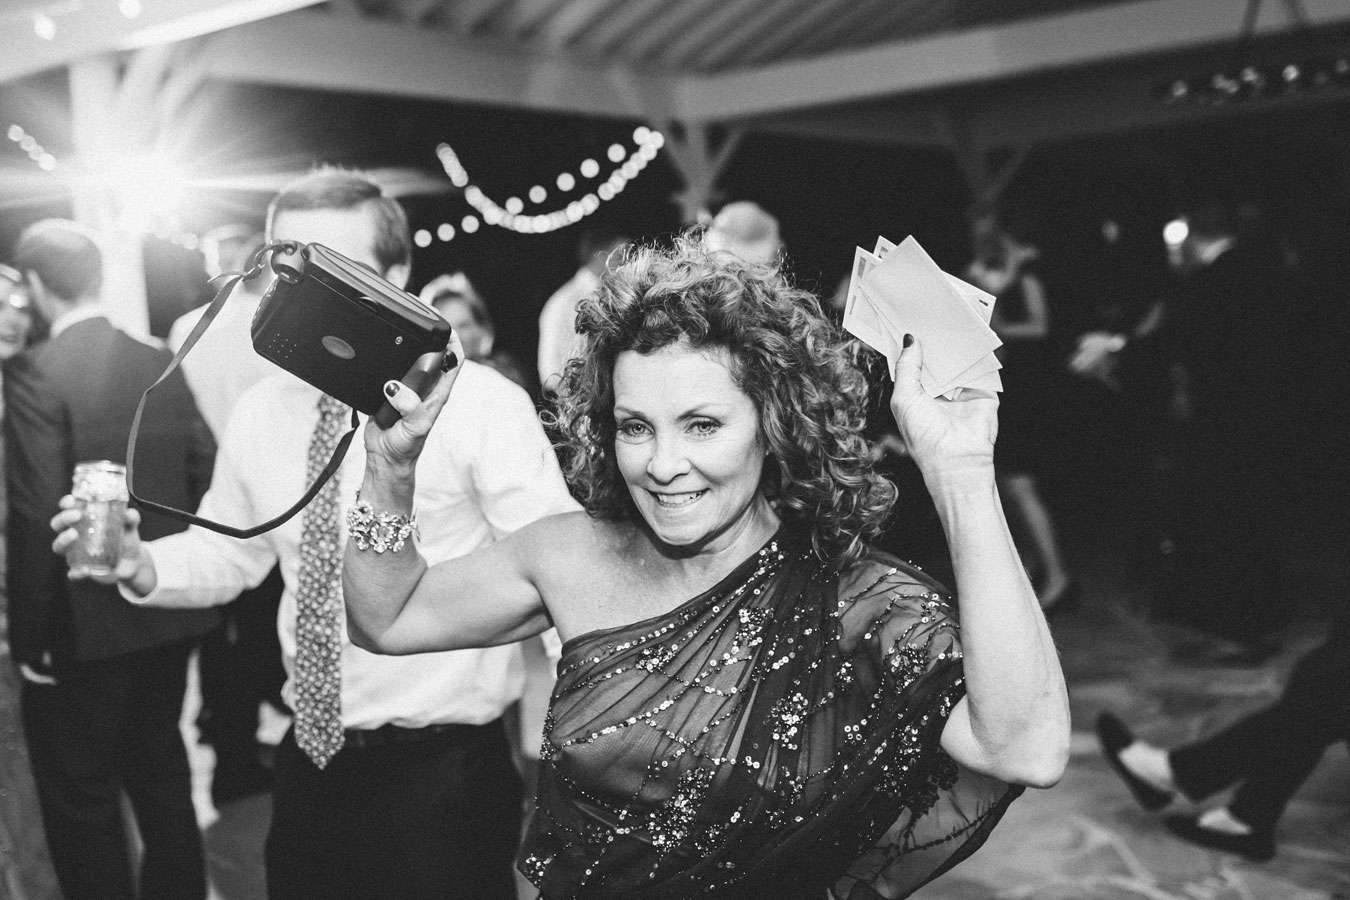 Me & Mr. Jones Wedding, Reception at Cedarwood in Nashville, Gold Wedding, Funny Wedding Photos, Polaroid Guest Book, Adrianna Papell Beaded One Shoulder Gown